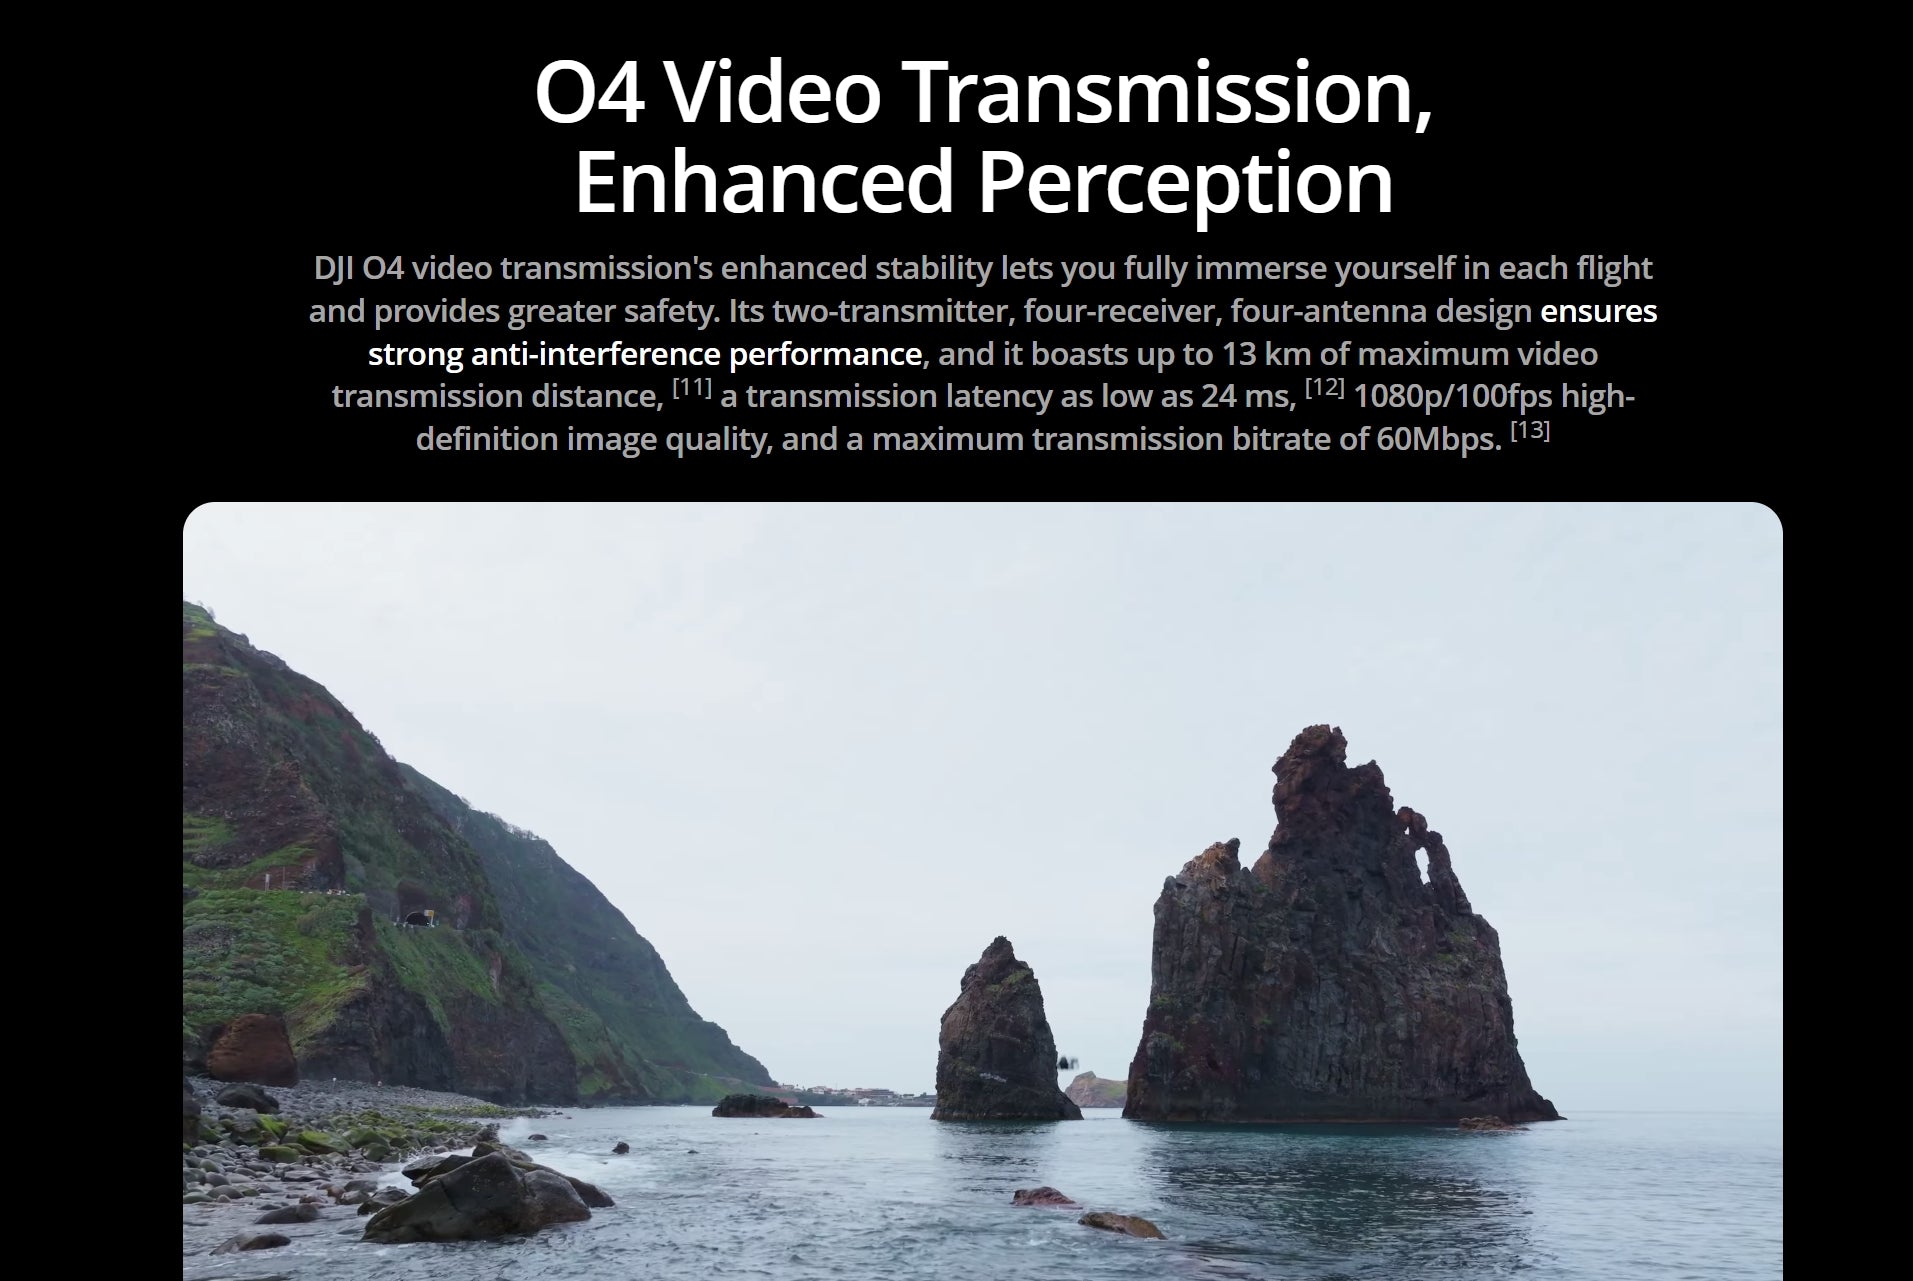 DJI 04 video transmission boasts a transmission latency as low as 24 ms